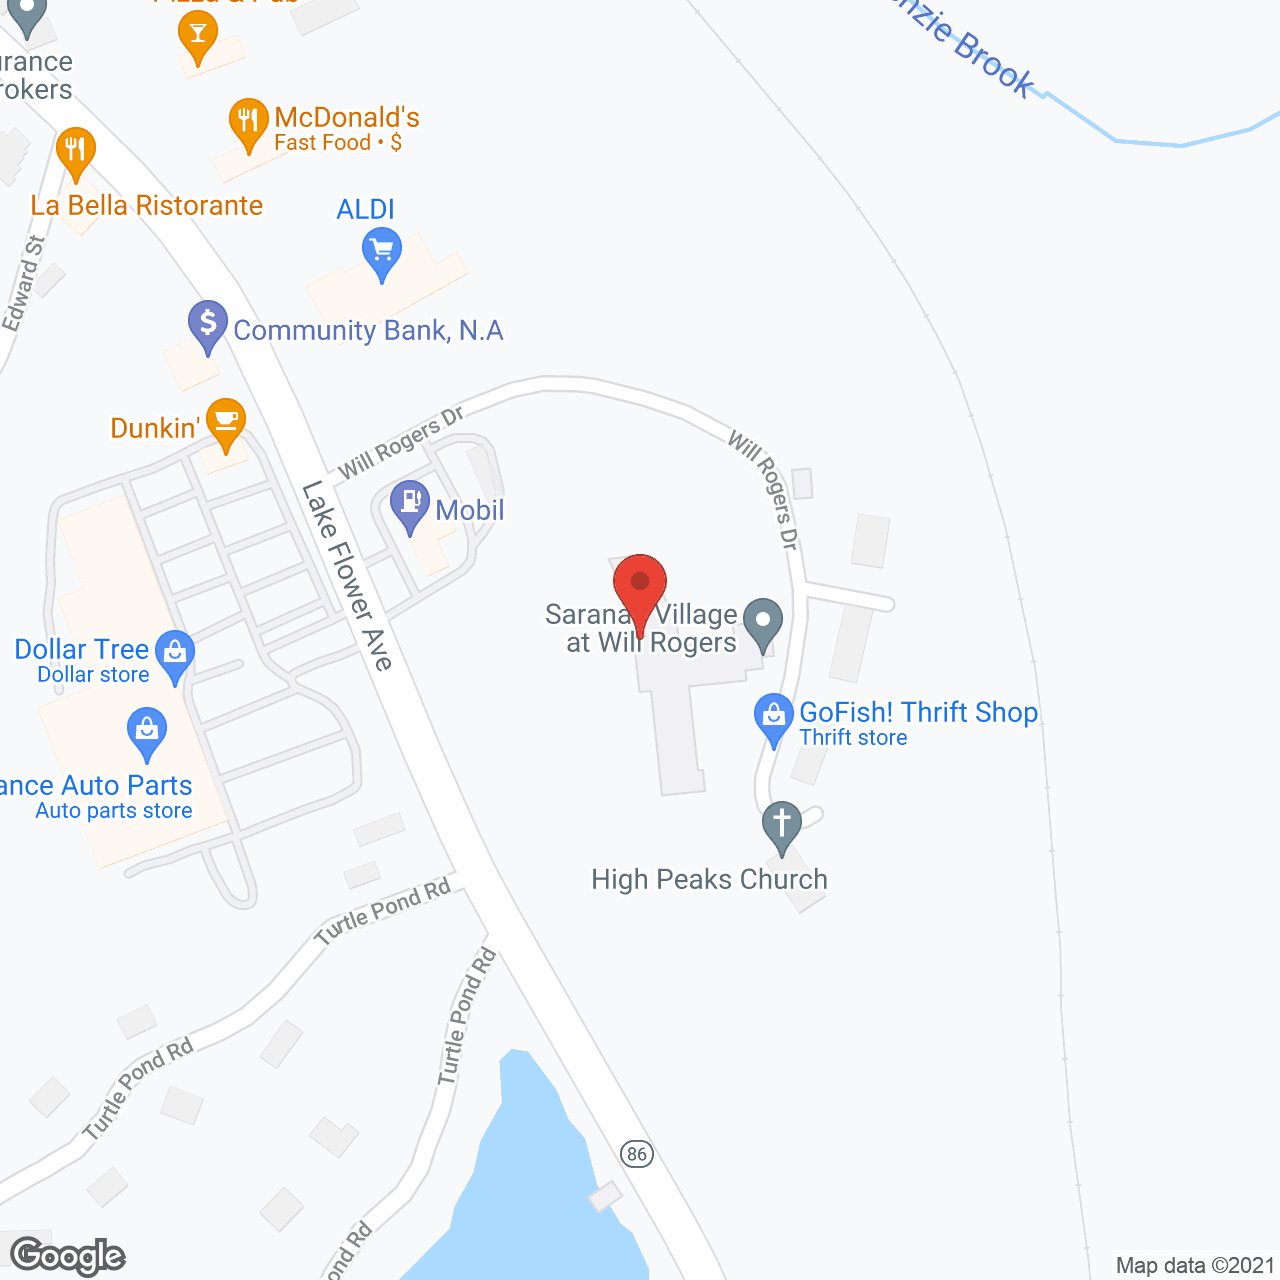 Saranac Village at Will Rogers in google map